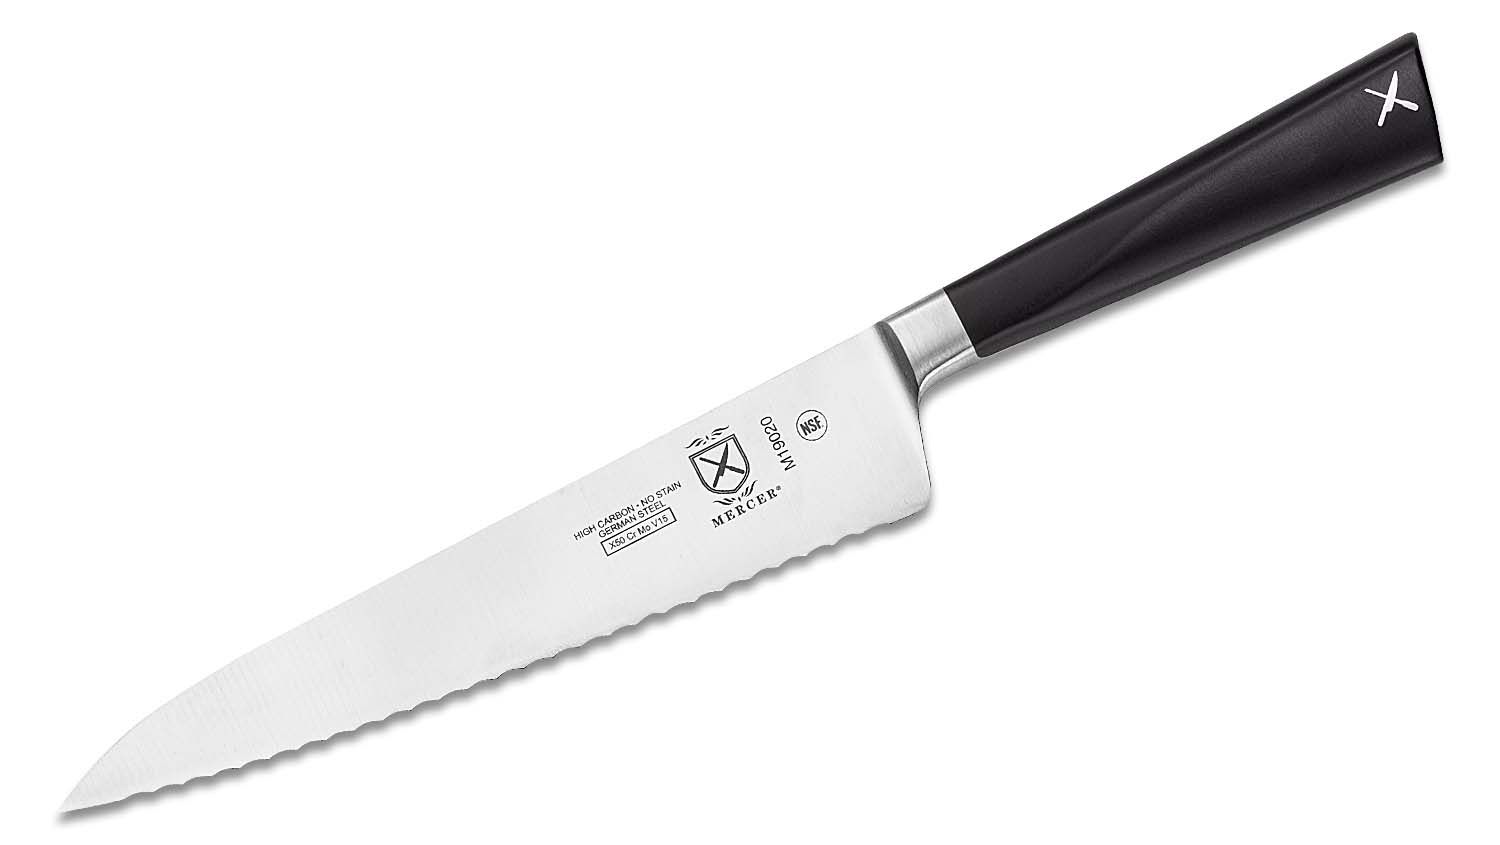 Mercer Culinary Züm Forged Utility Wavy Edge Knife, 6 Inch,Black